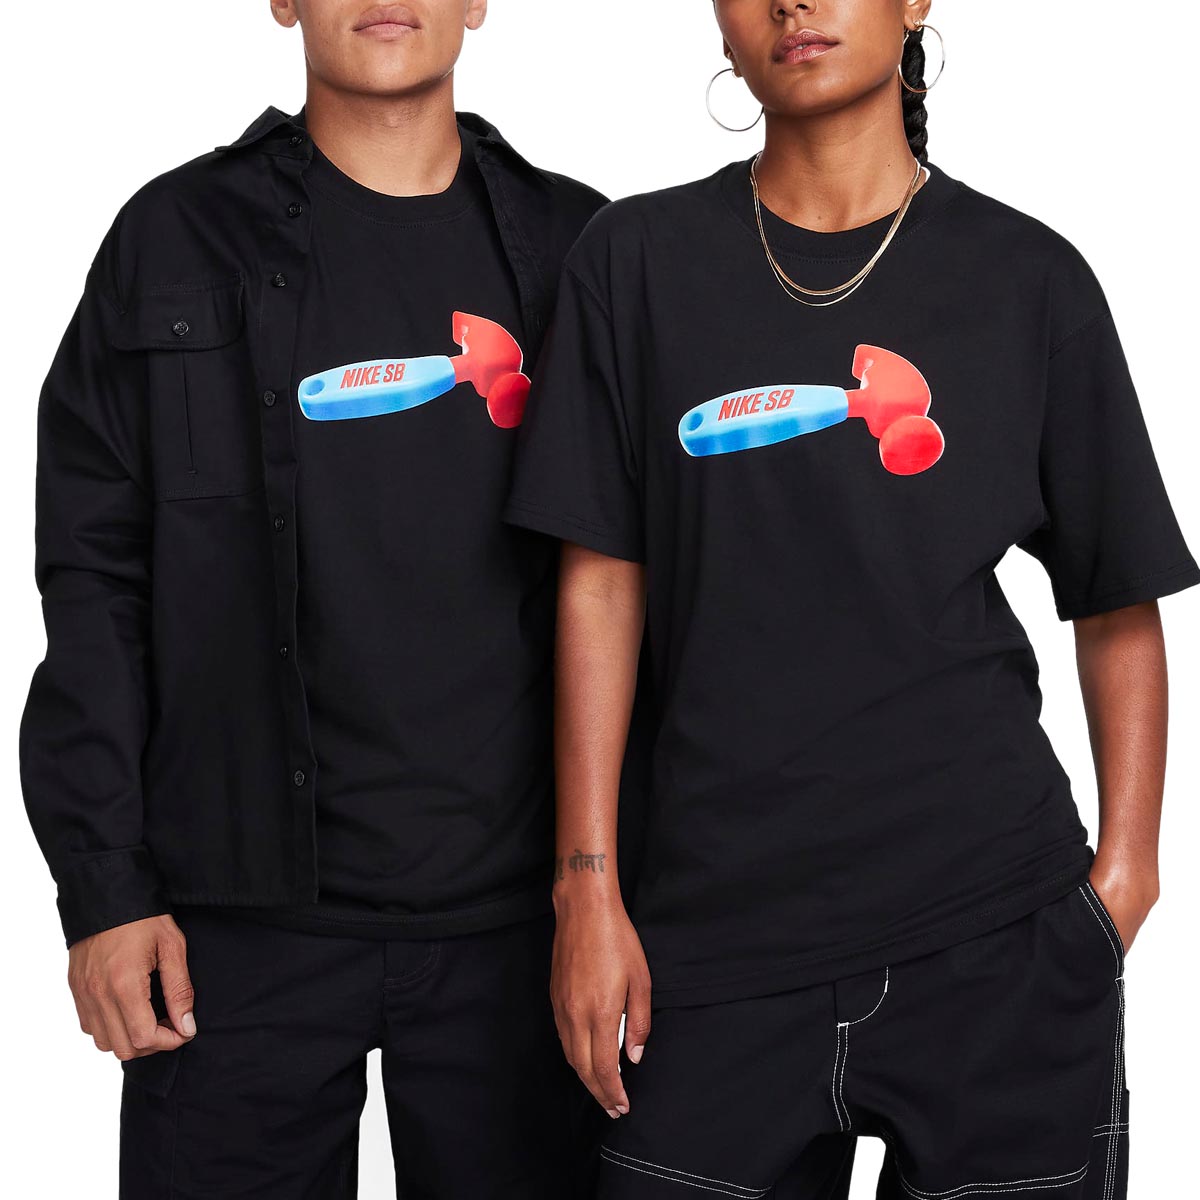 Nike SB Hammer T-Shirt - Black image 2